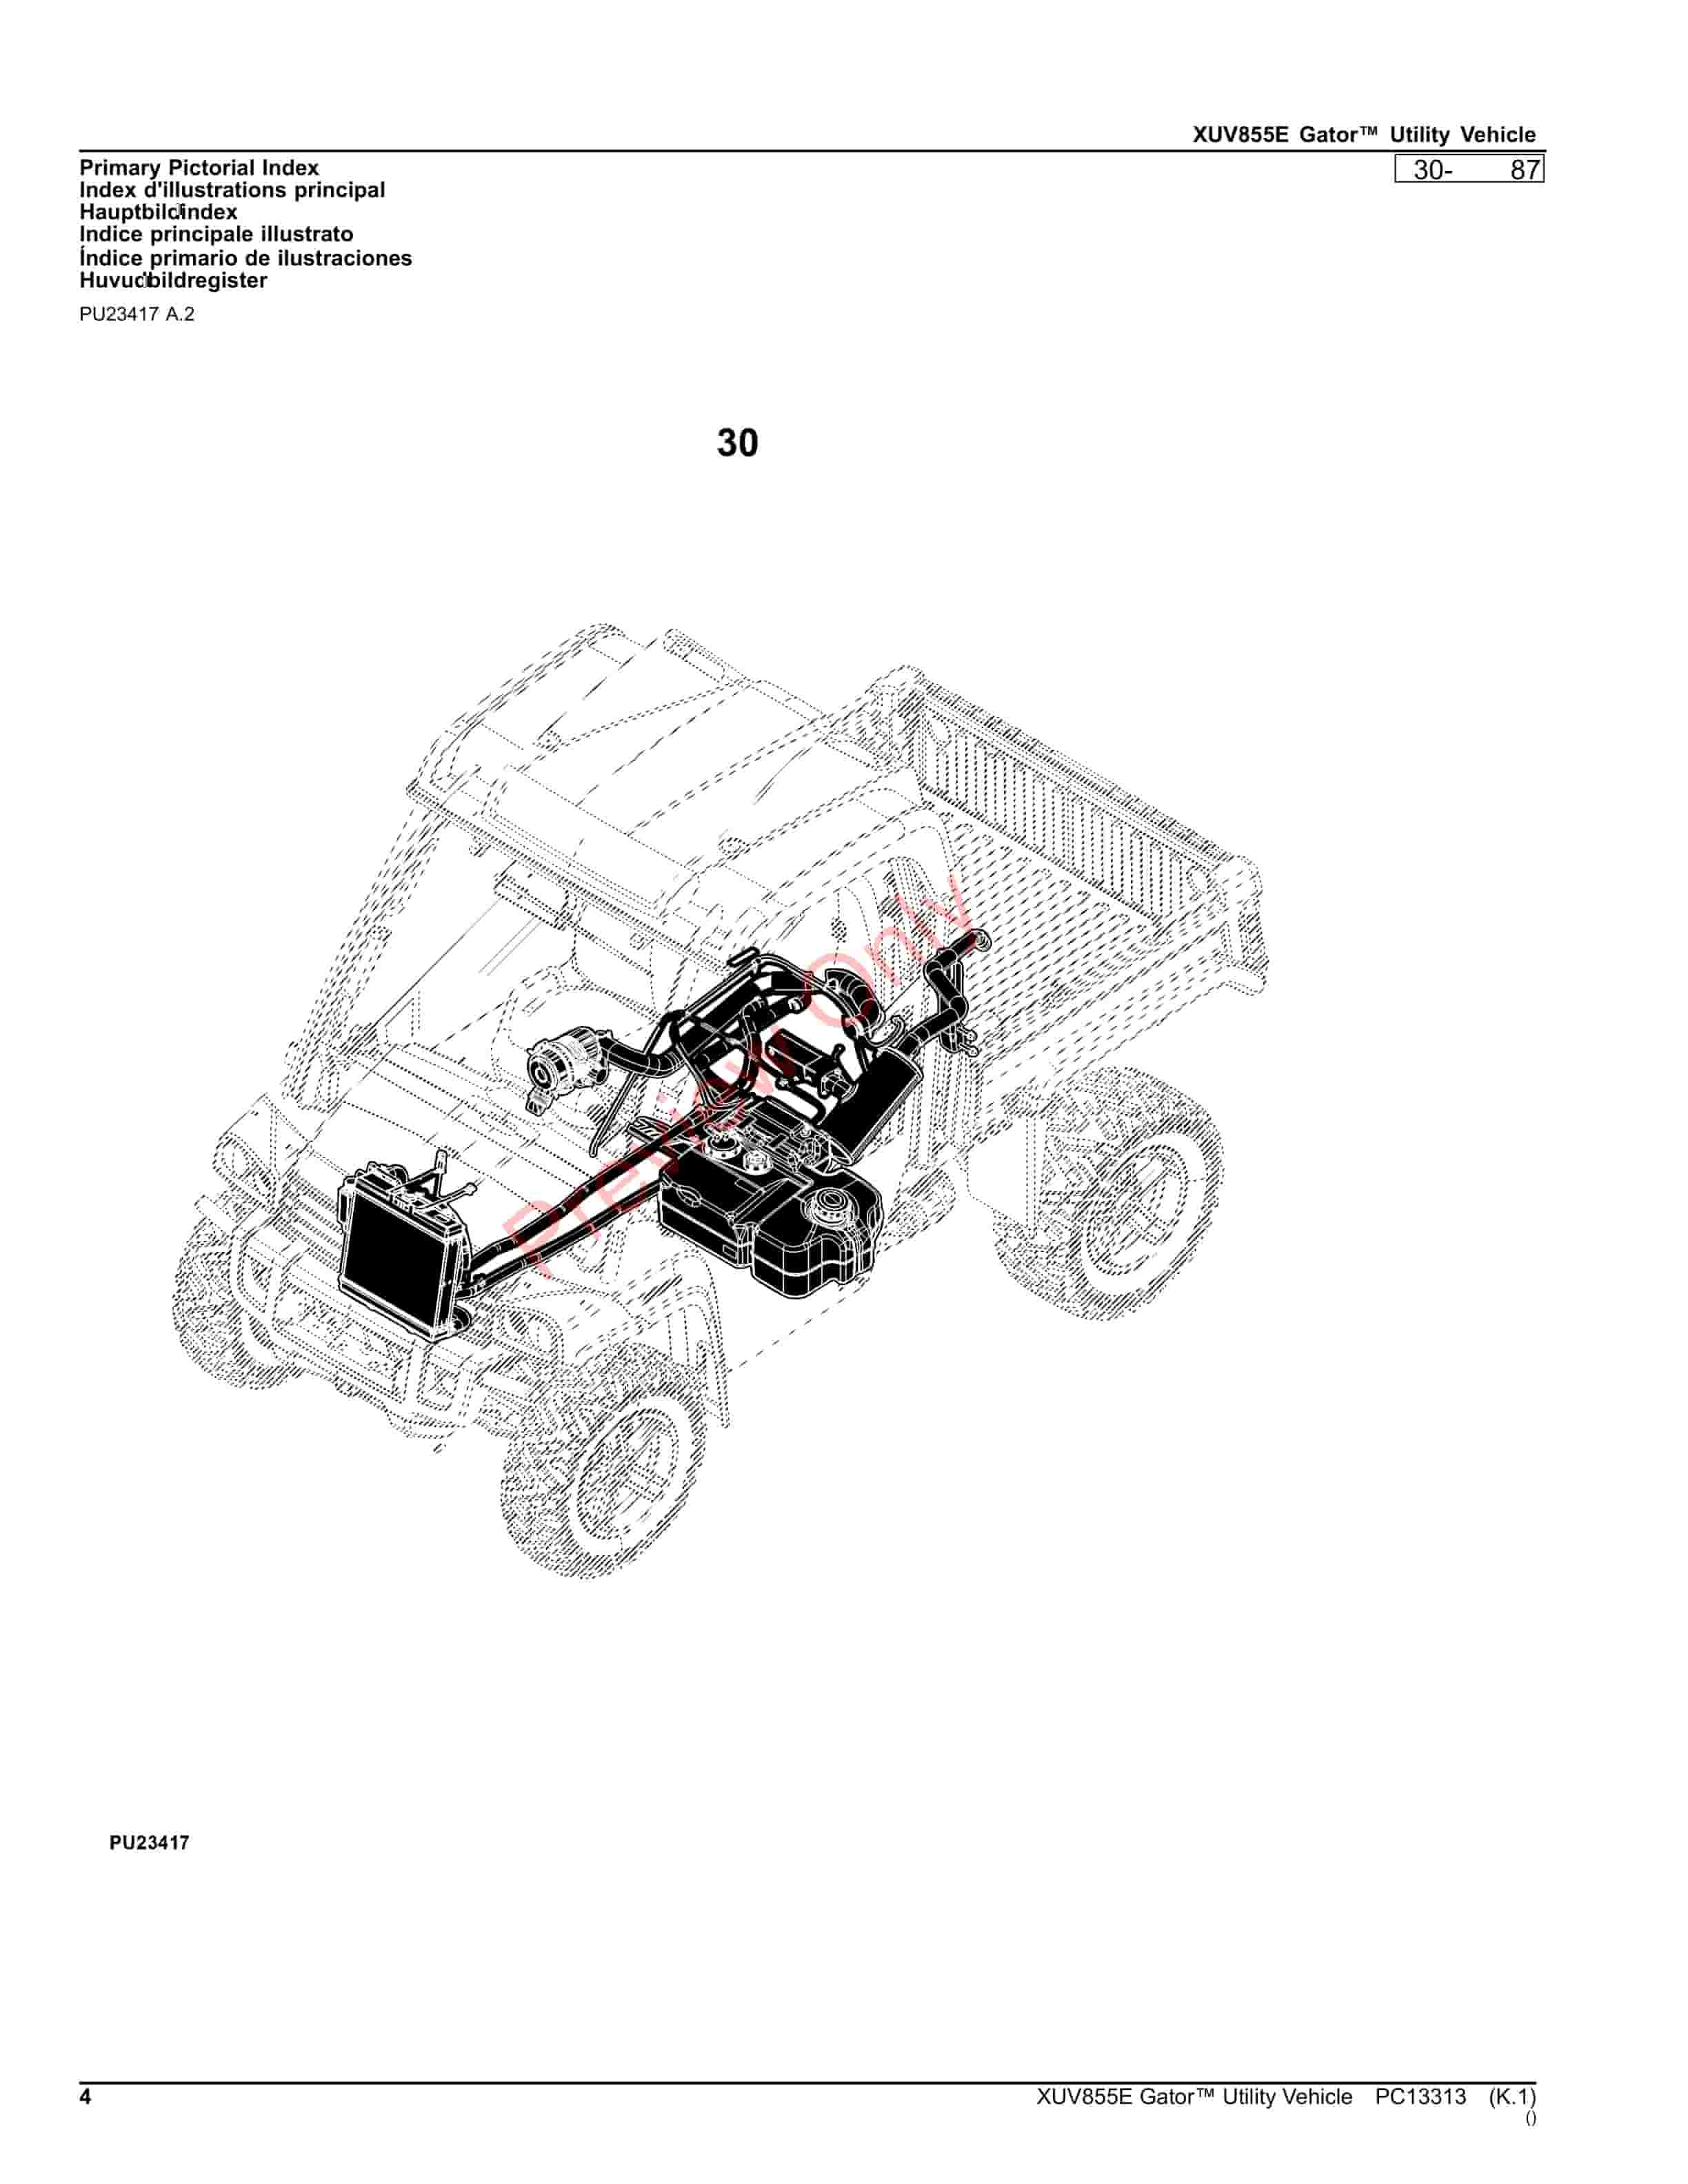 John Deere XUV855E Gator Utility Vehicle Parts Catalog PC13313 14SEP23-4